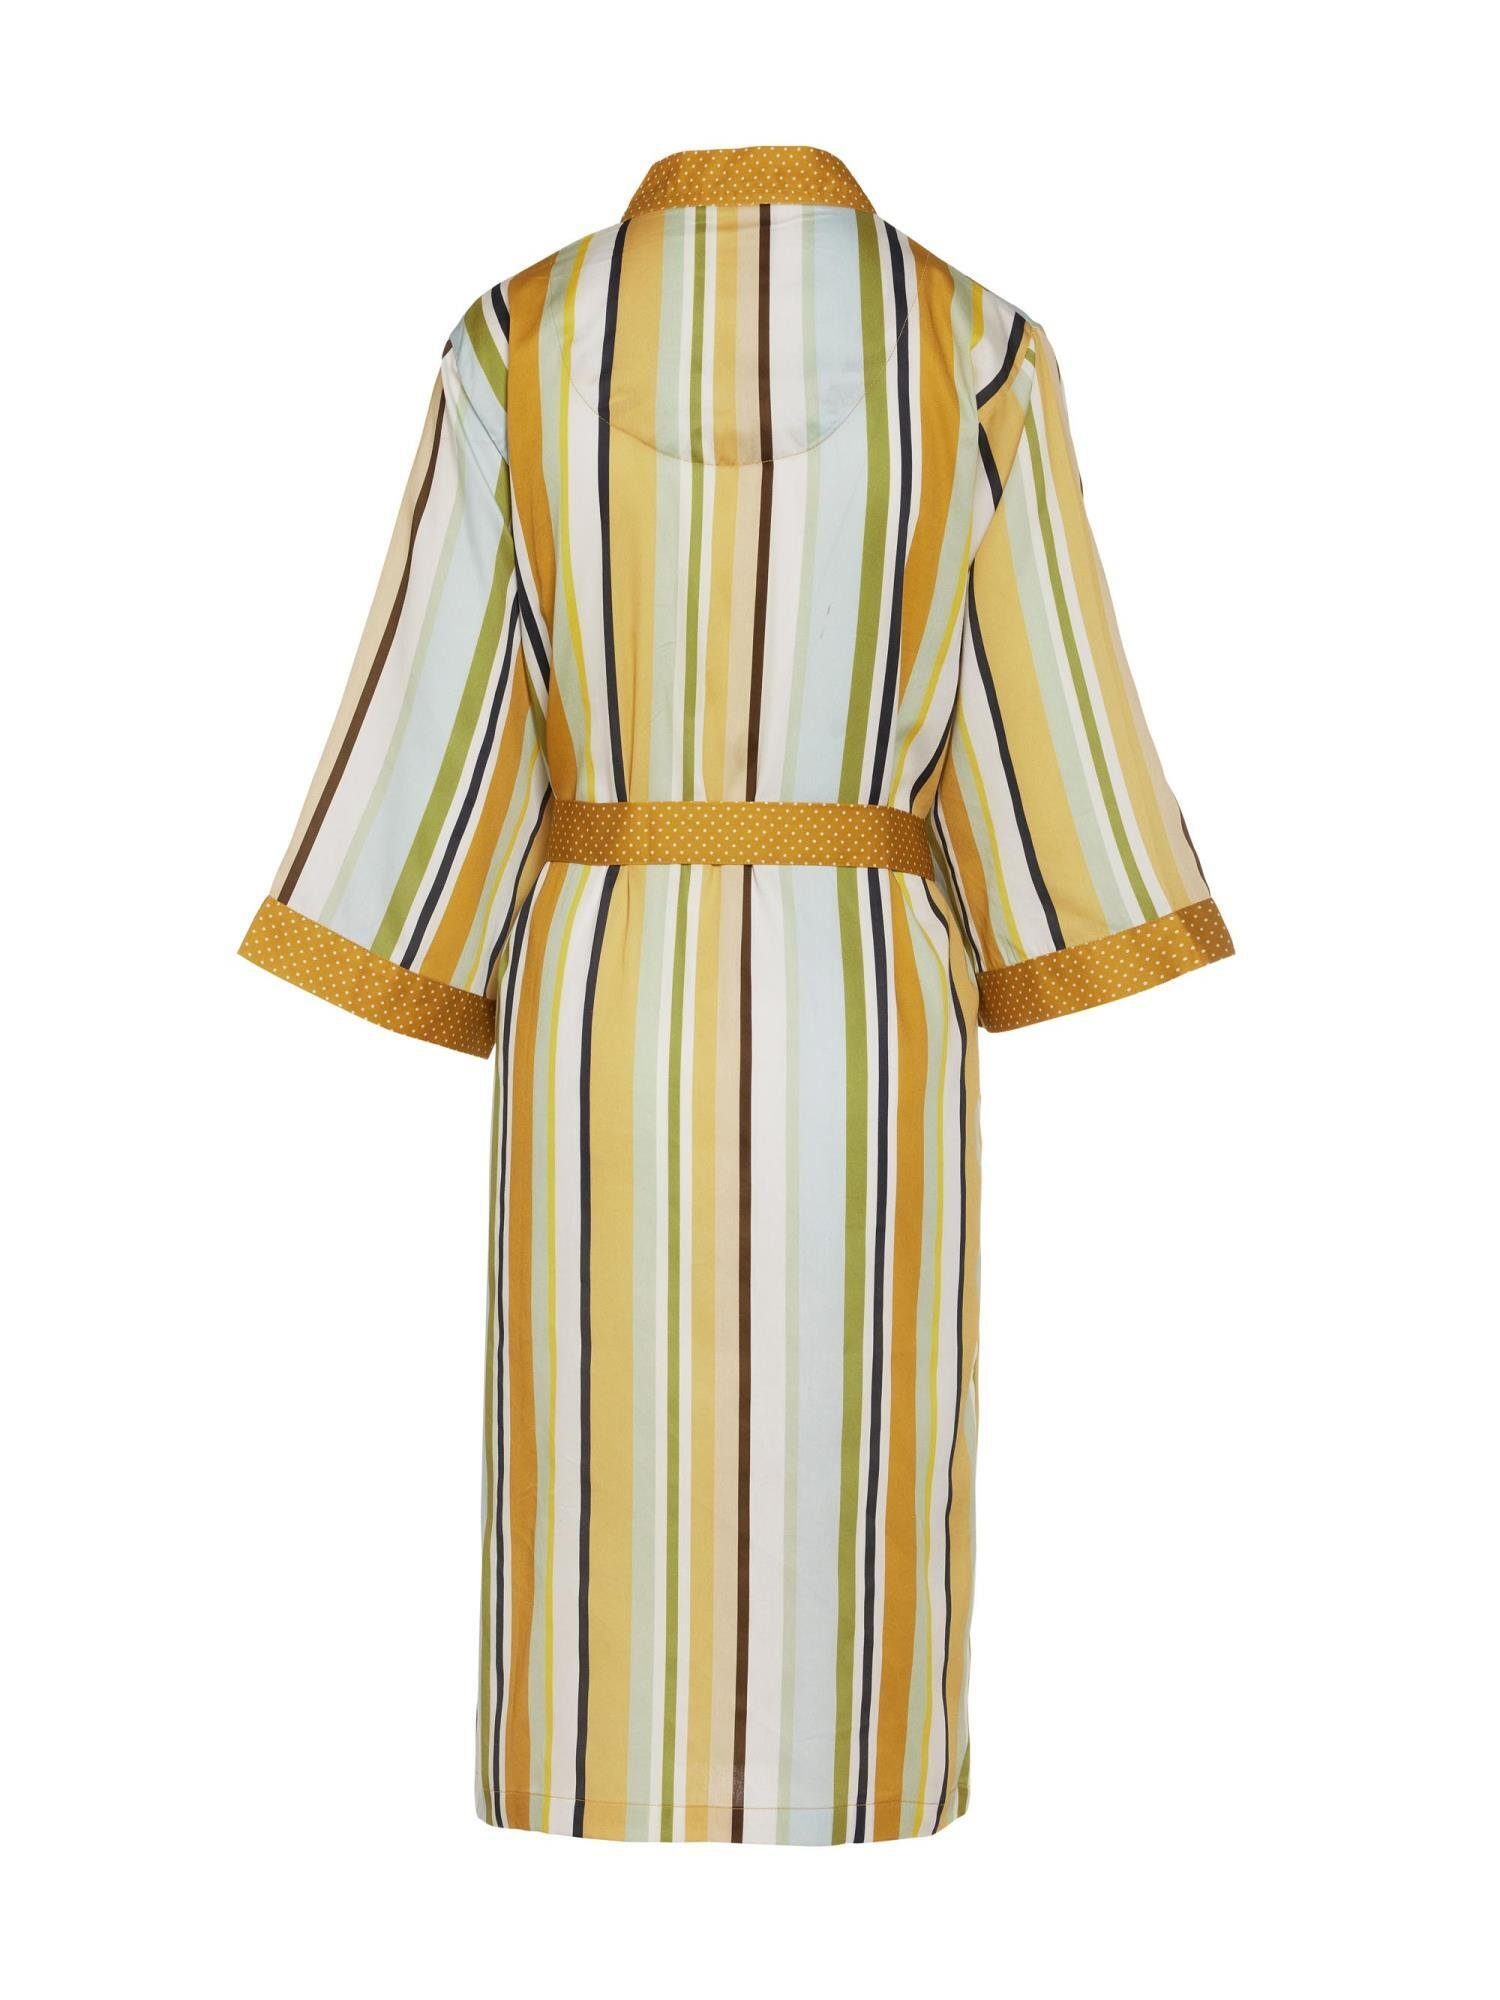 Gürtel, Essenza Sarai Kimono Baumwolle, Kurzform, Feija, Kimono-Kragen, mit Streifen